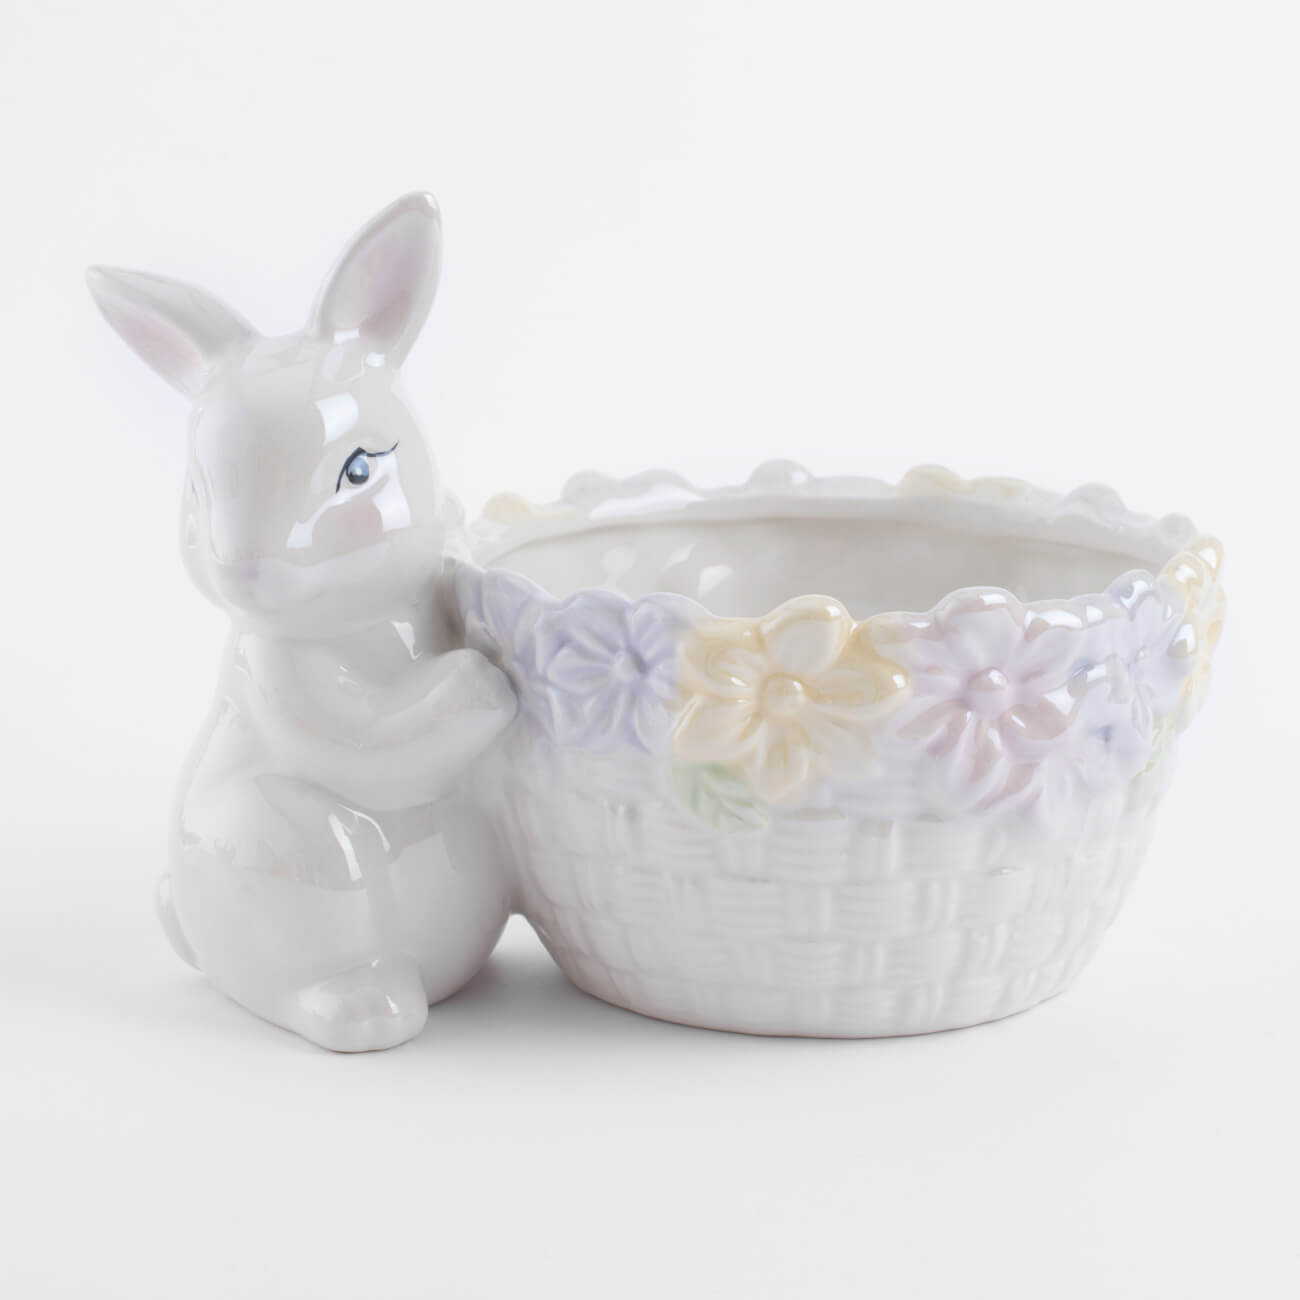 конфетница 18x13 см керамика перламутр кролик с корзиной в ах easter Конфетница, 18x13 см, керамика, перламутр, Кролик с корзиной в цветах, Easter